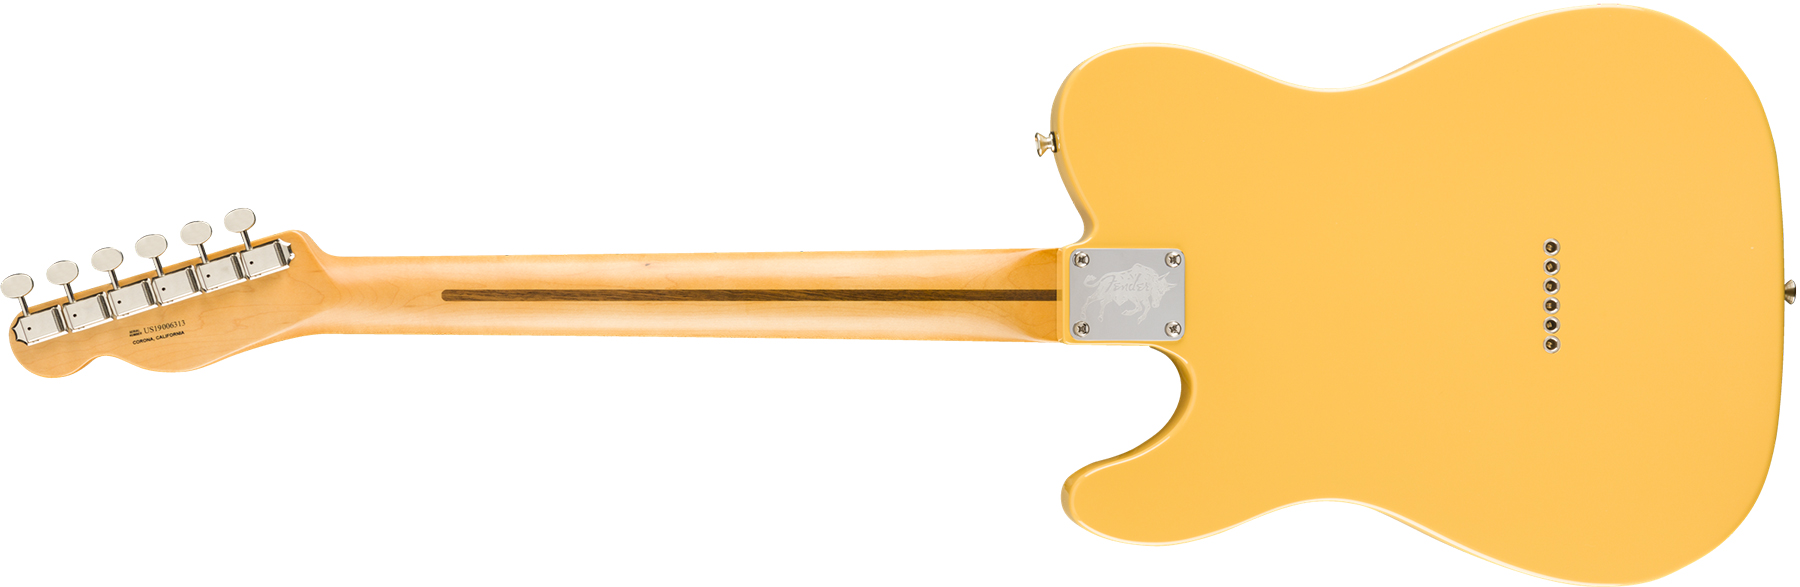 Fender Britt Daniel Tele Thinline Signature Ss Mn - Amarillo Gold - Semi hollow elektriche gitaar - Variation 1